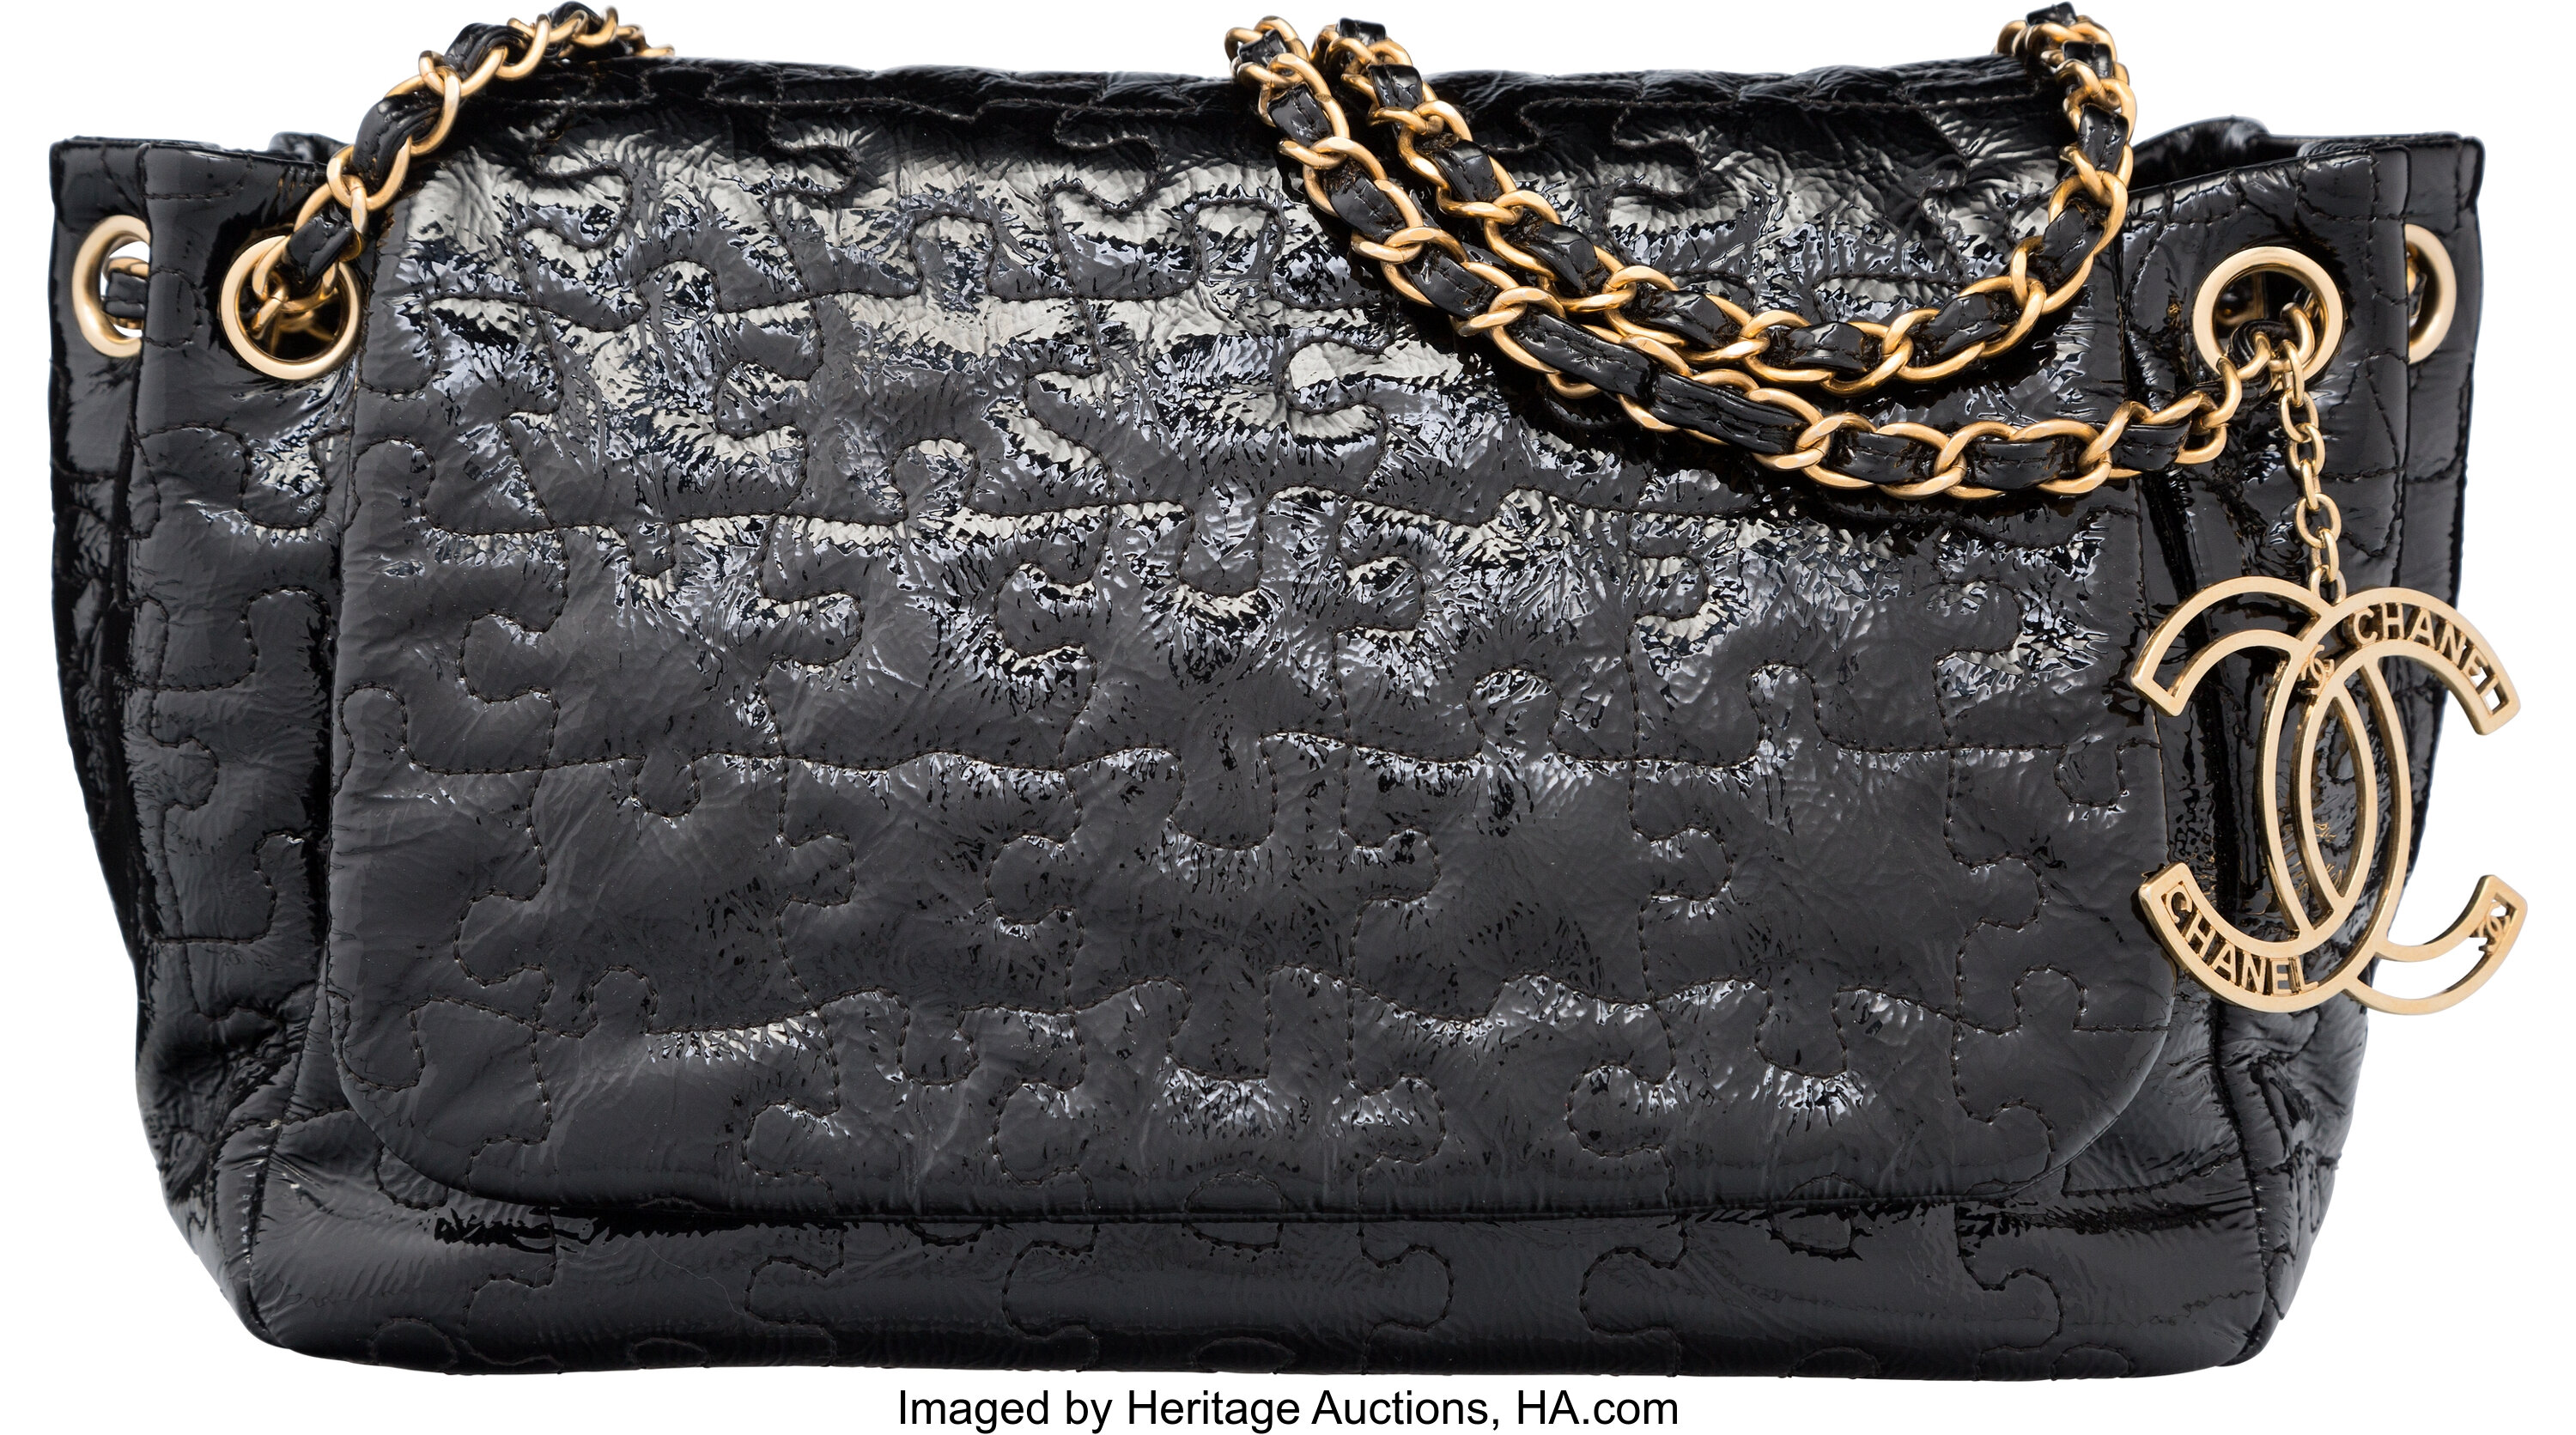 Lot - Mini Black Patent Leather & Woven CHANEL bag